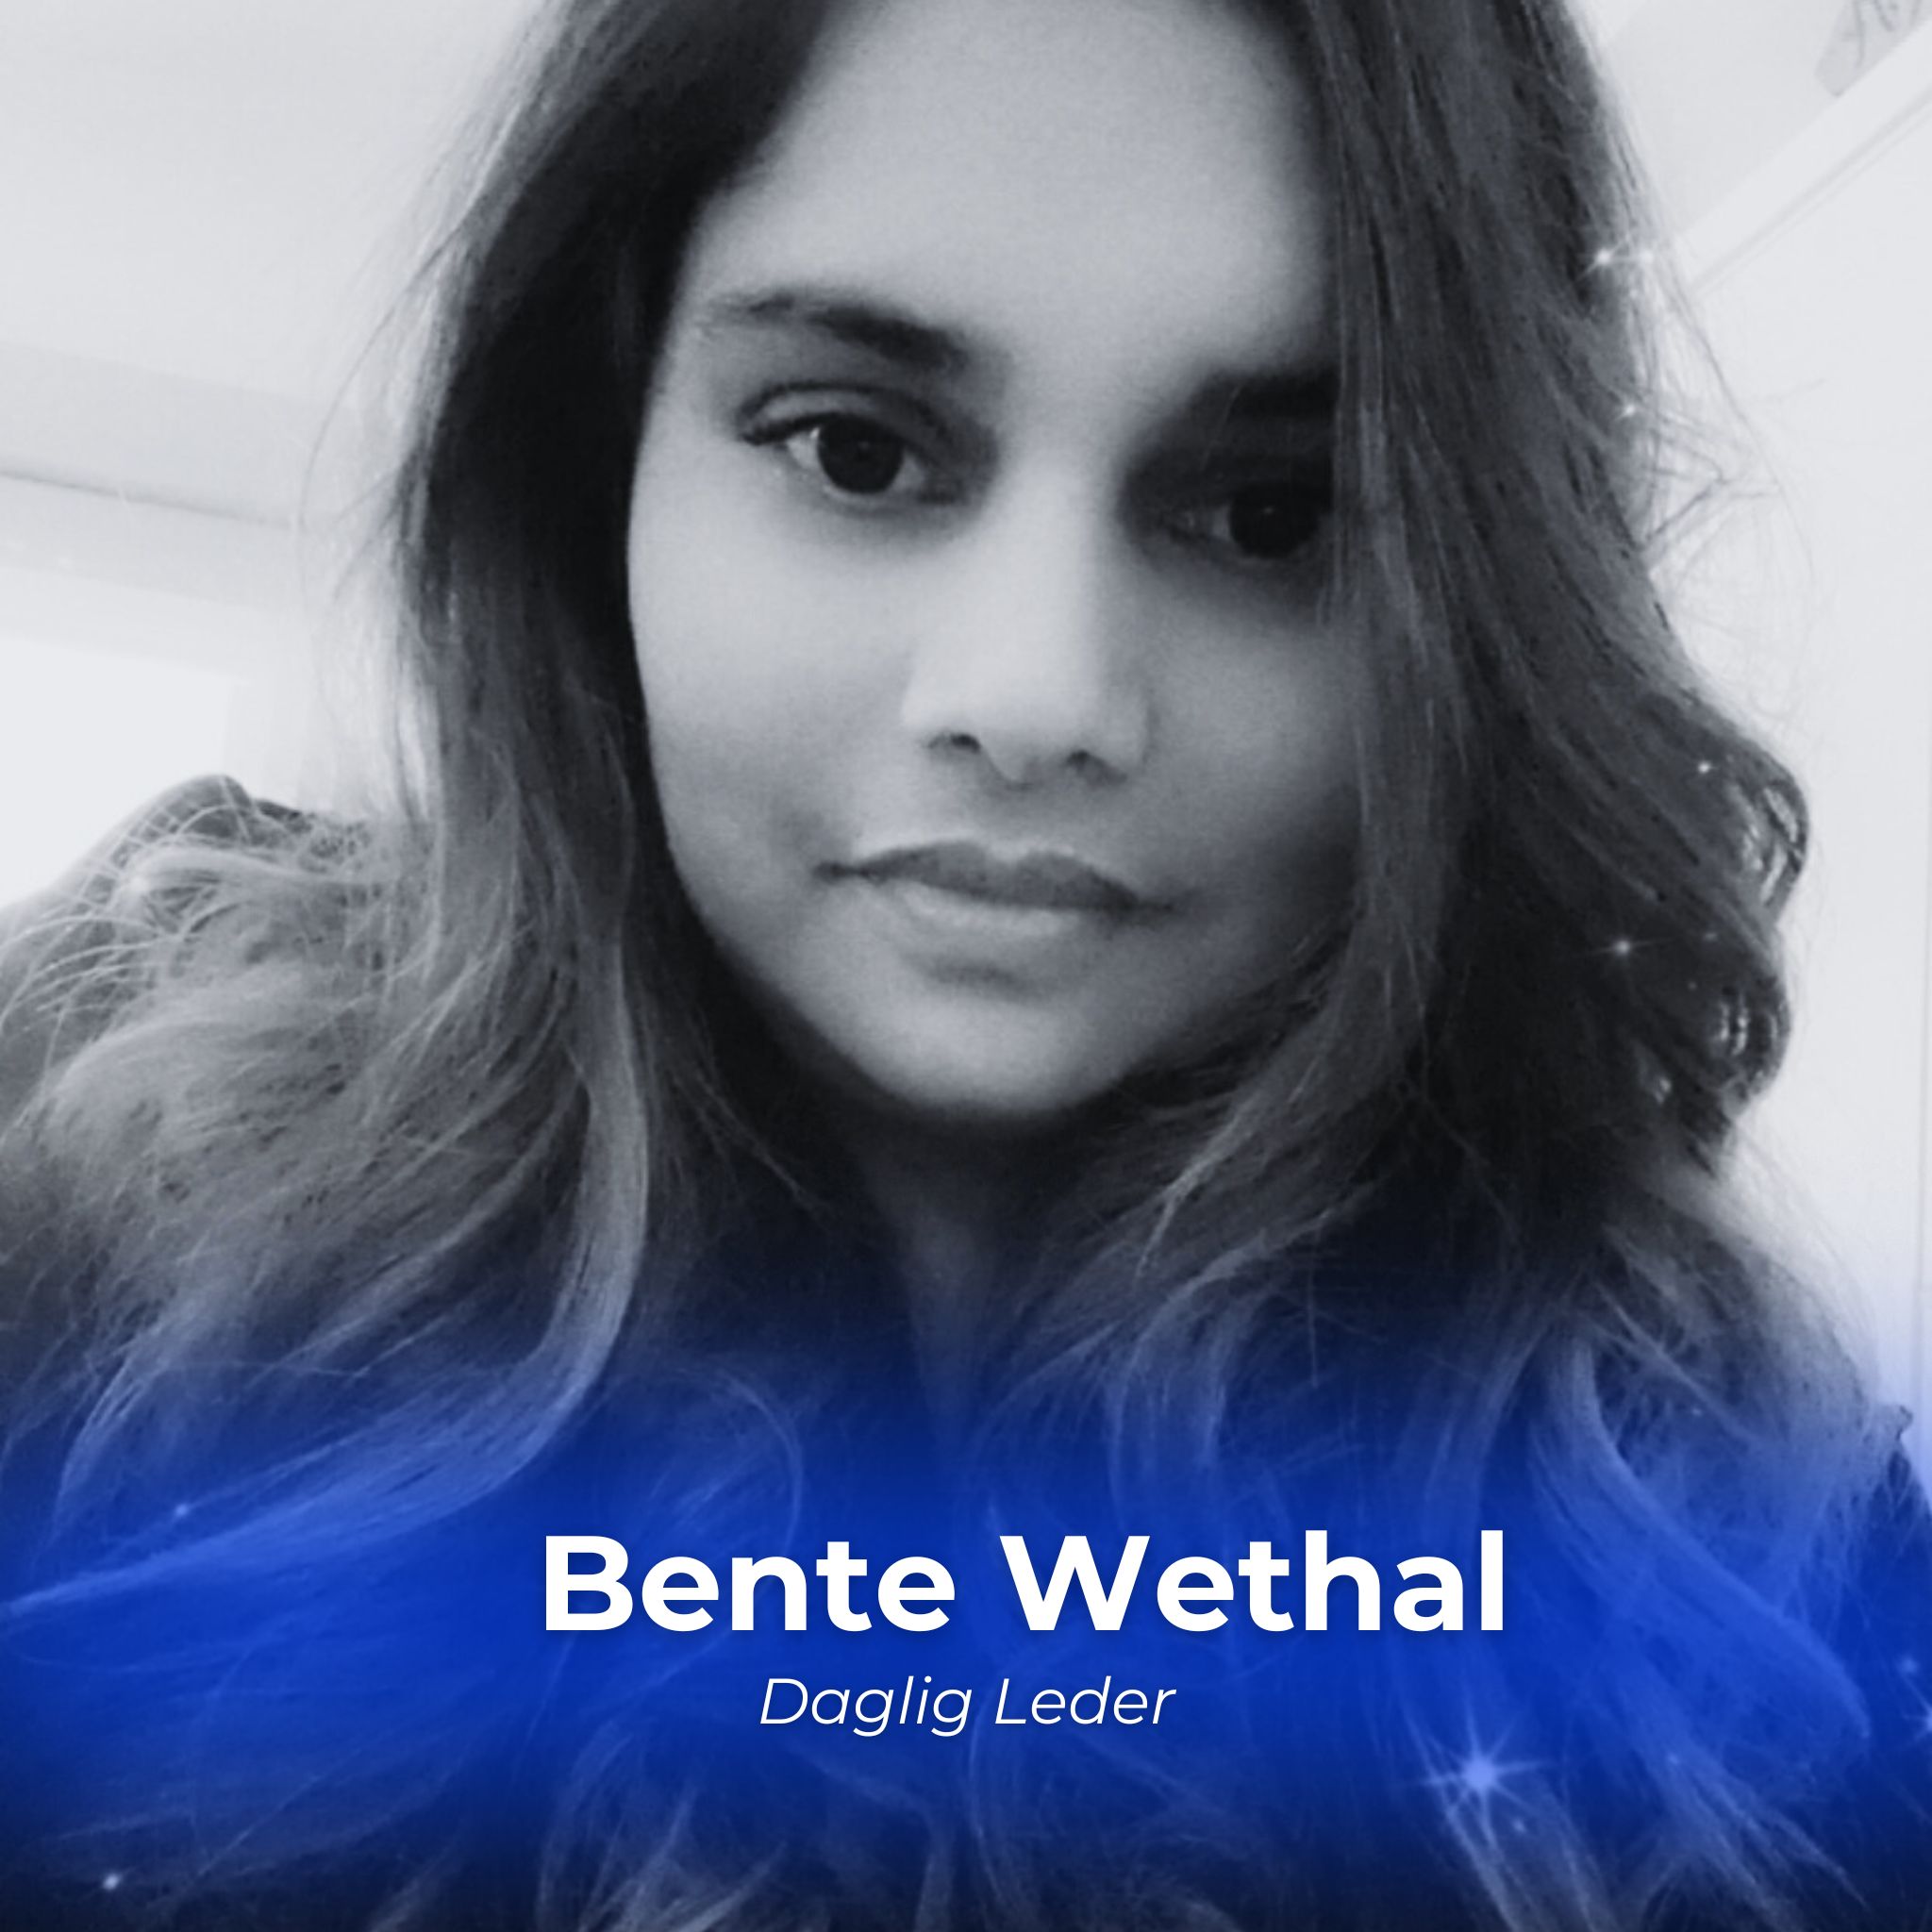 Bente Wethal